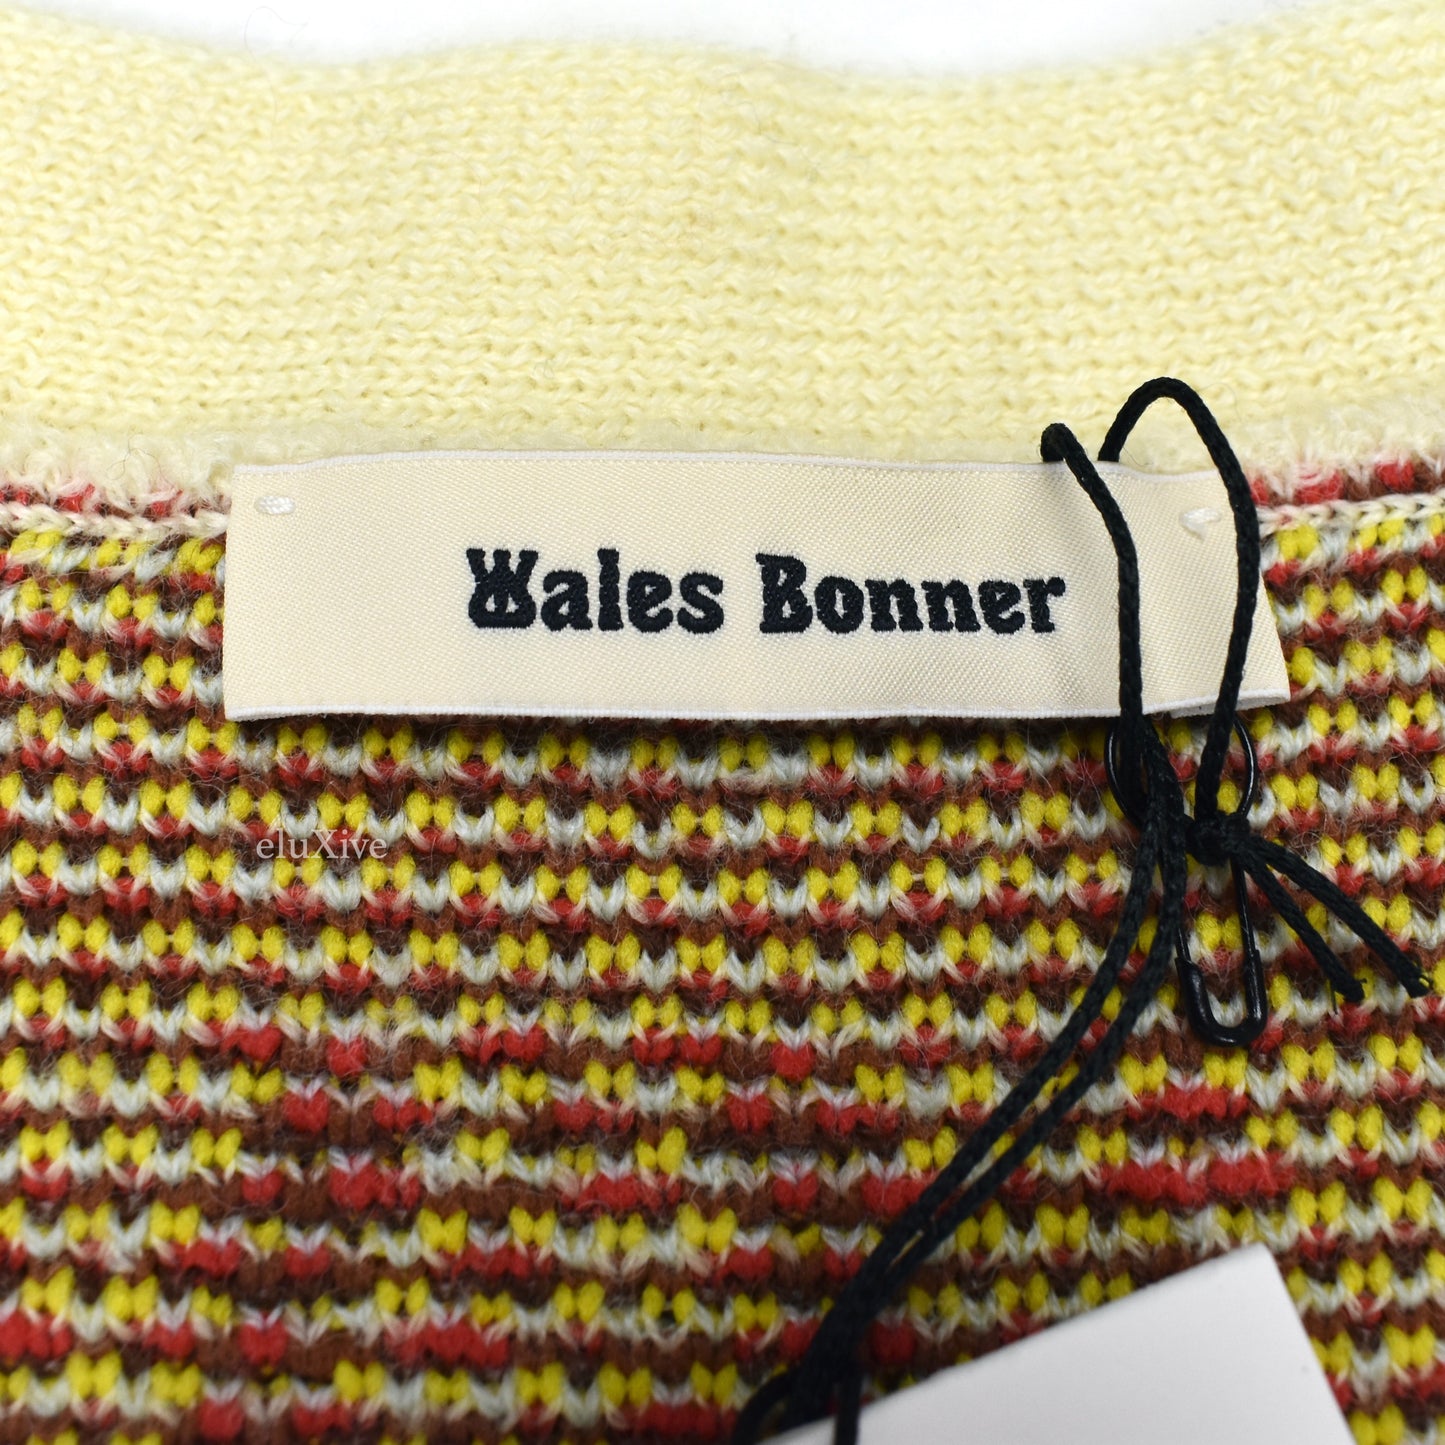 Wales Bonner - Fair Isle Knit Merino Wool Cardigan